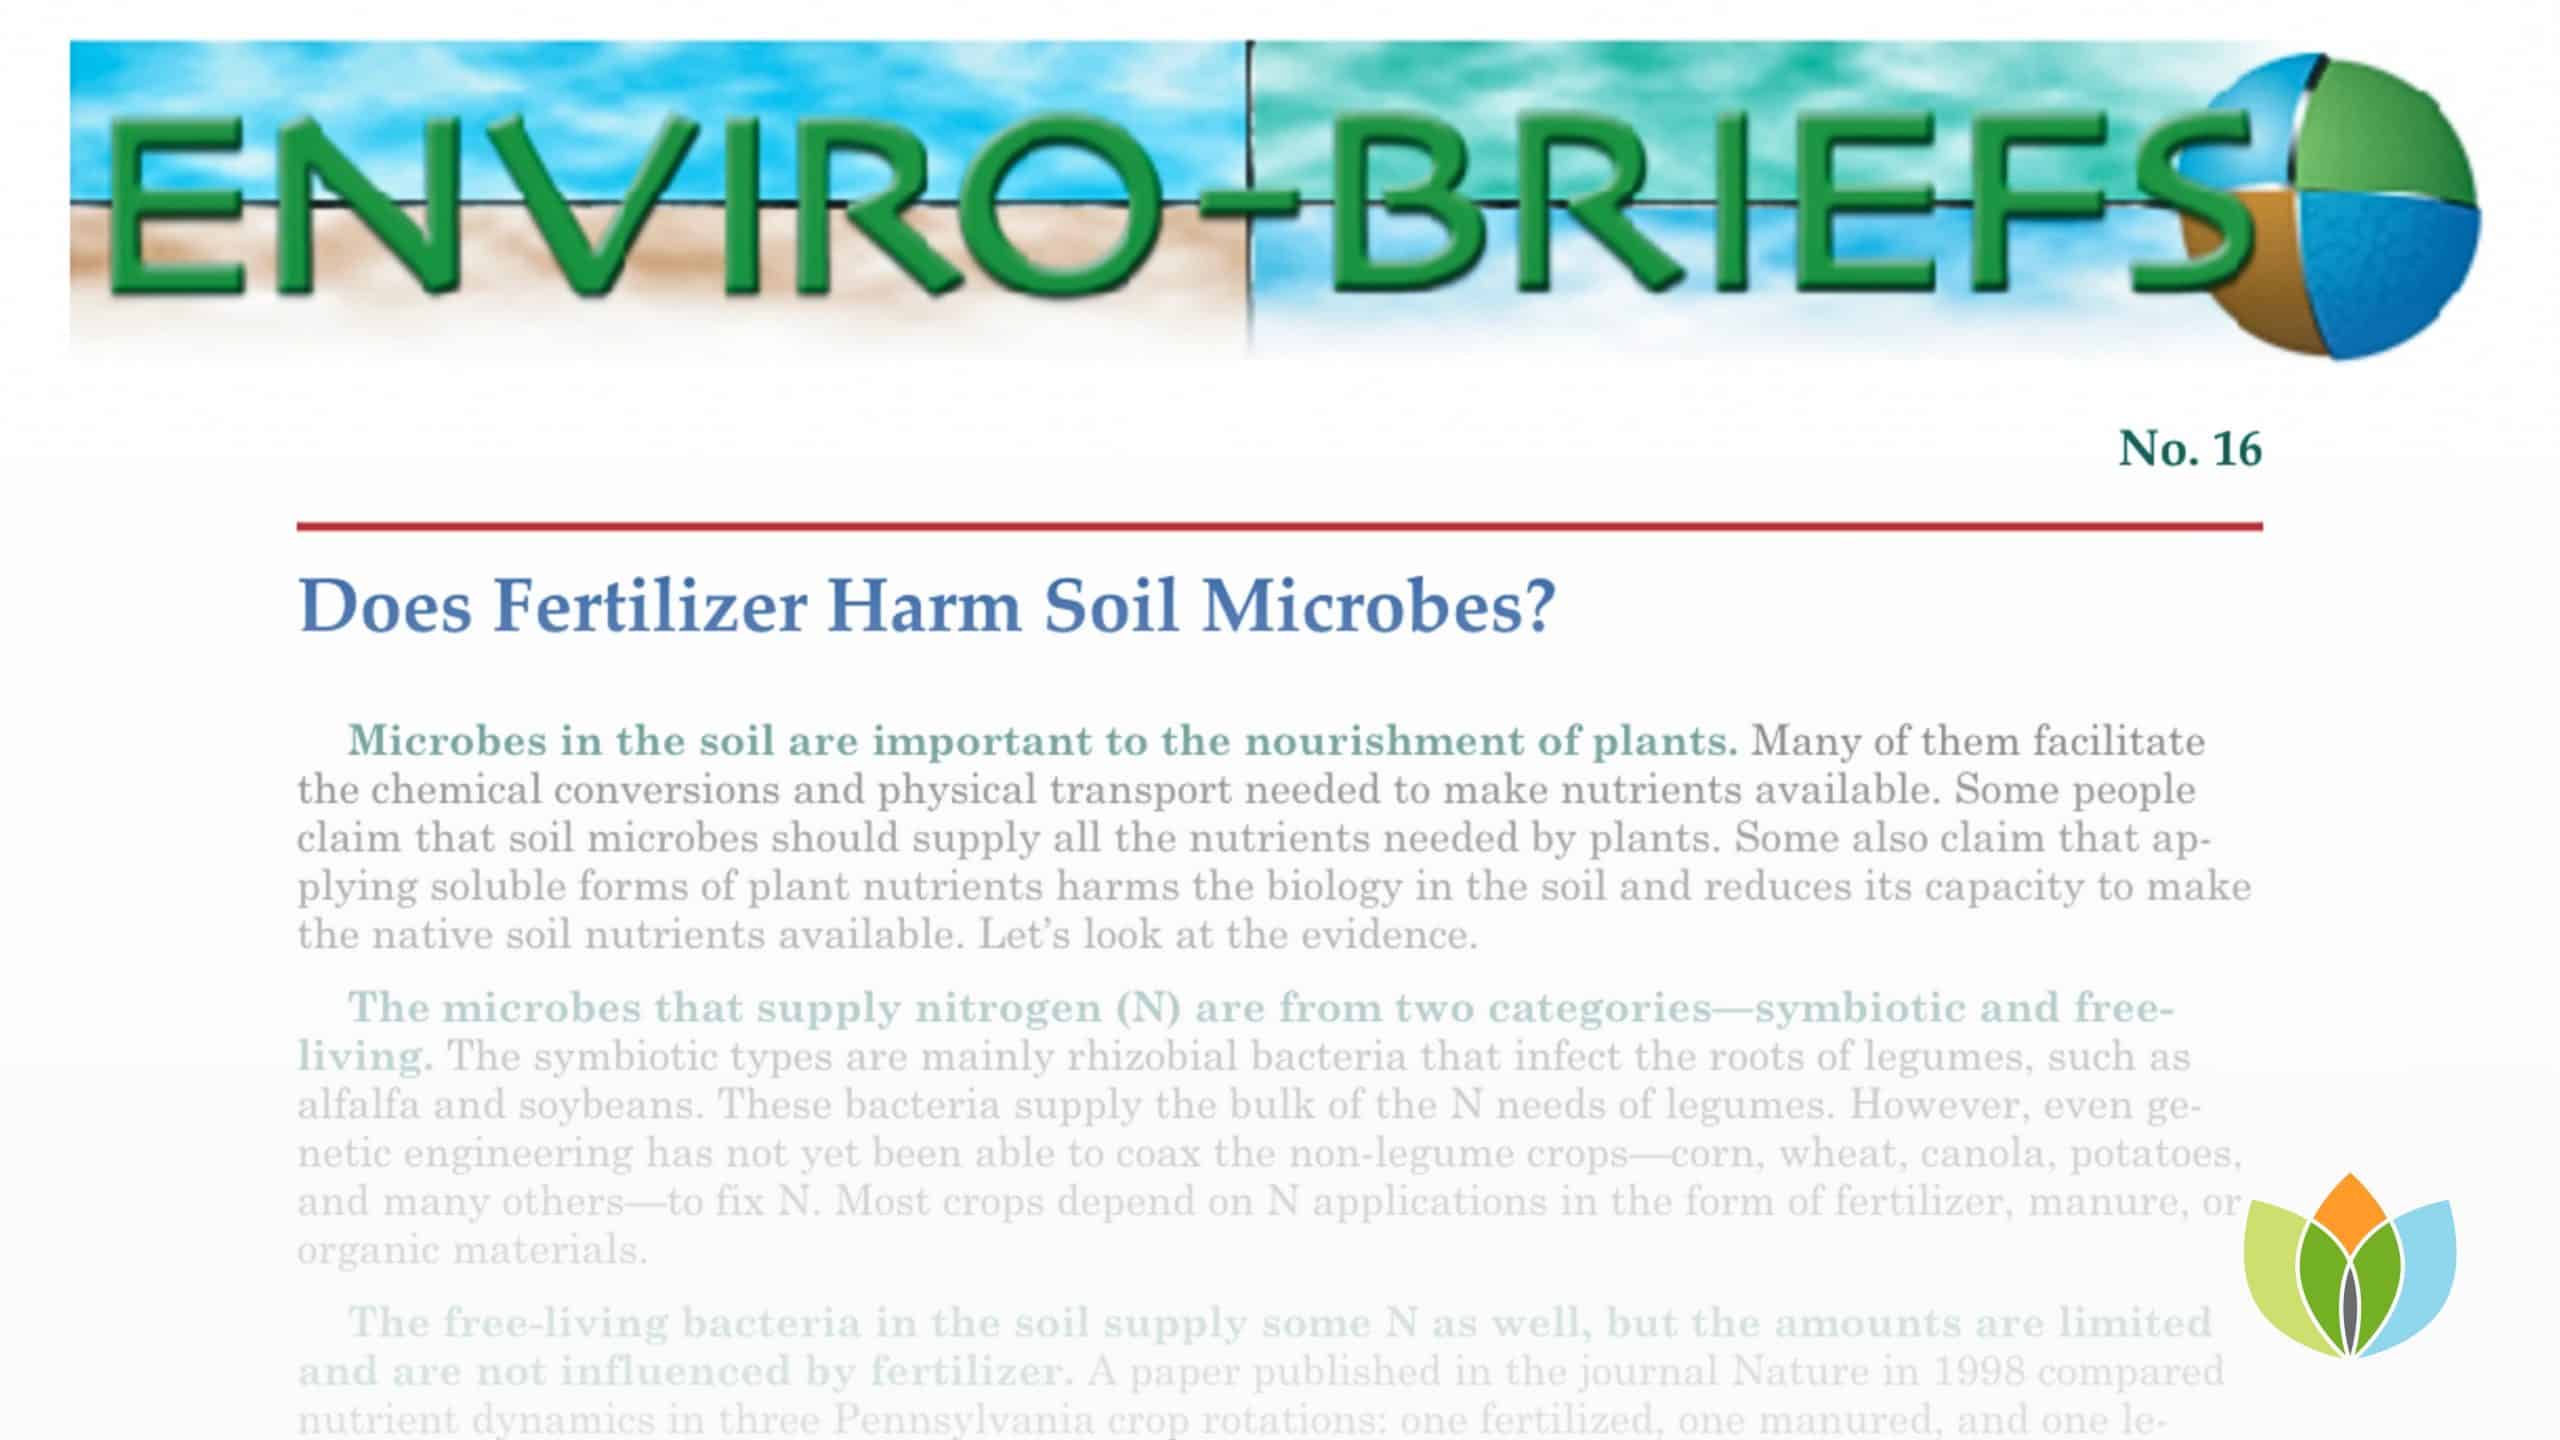 Does Fertilizer Harm Soil Microbes?